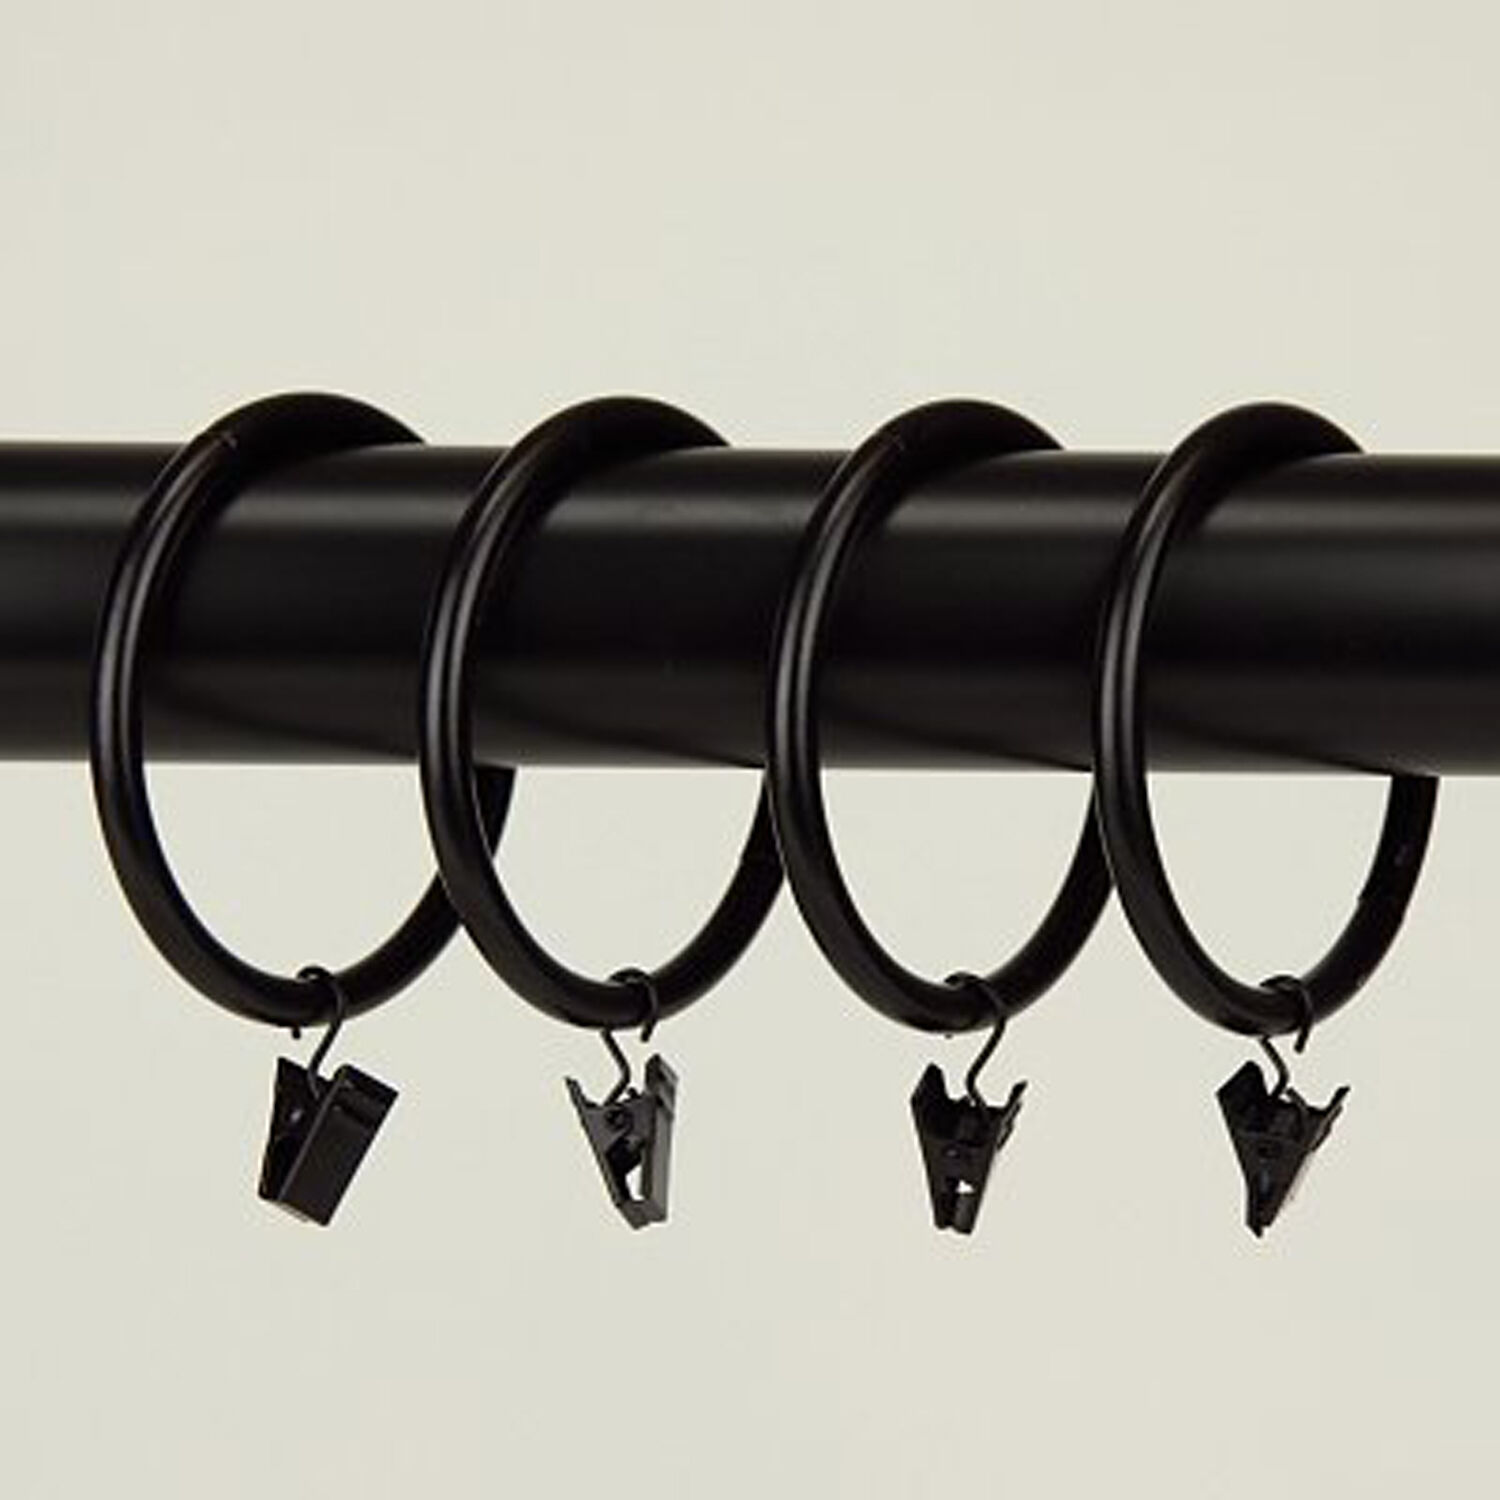 Black 2-1/2 Inch Heavy Duty Curtain Clip Rings, Set of 10